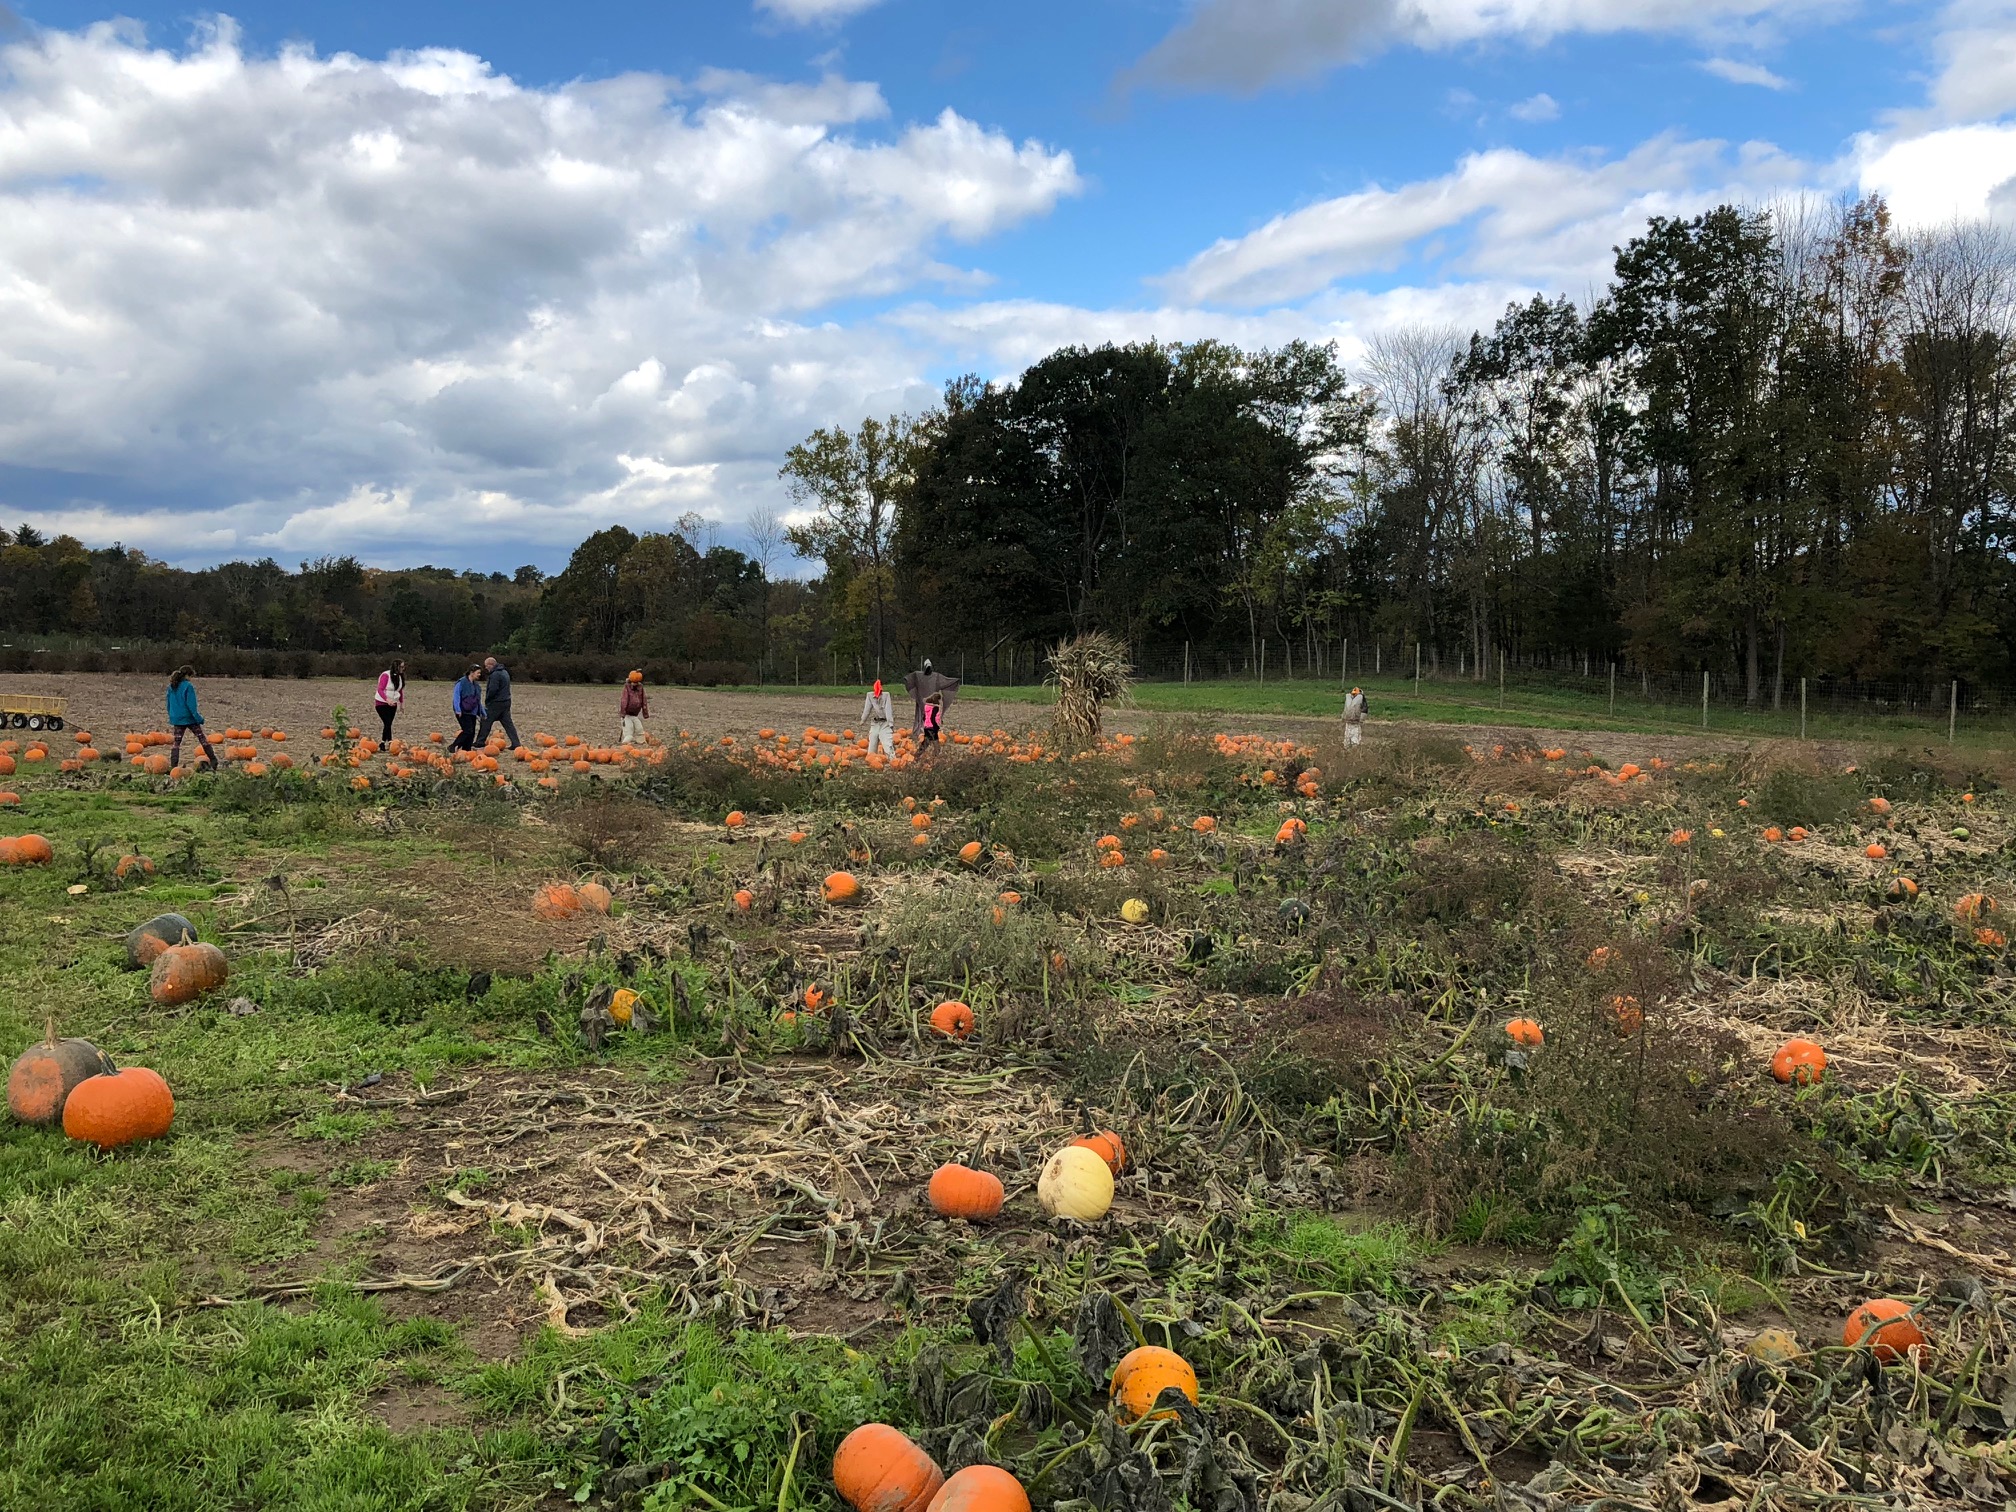 Pumpkin Picking - Fall Fun in the Hudson Valley